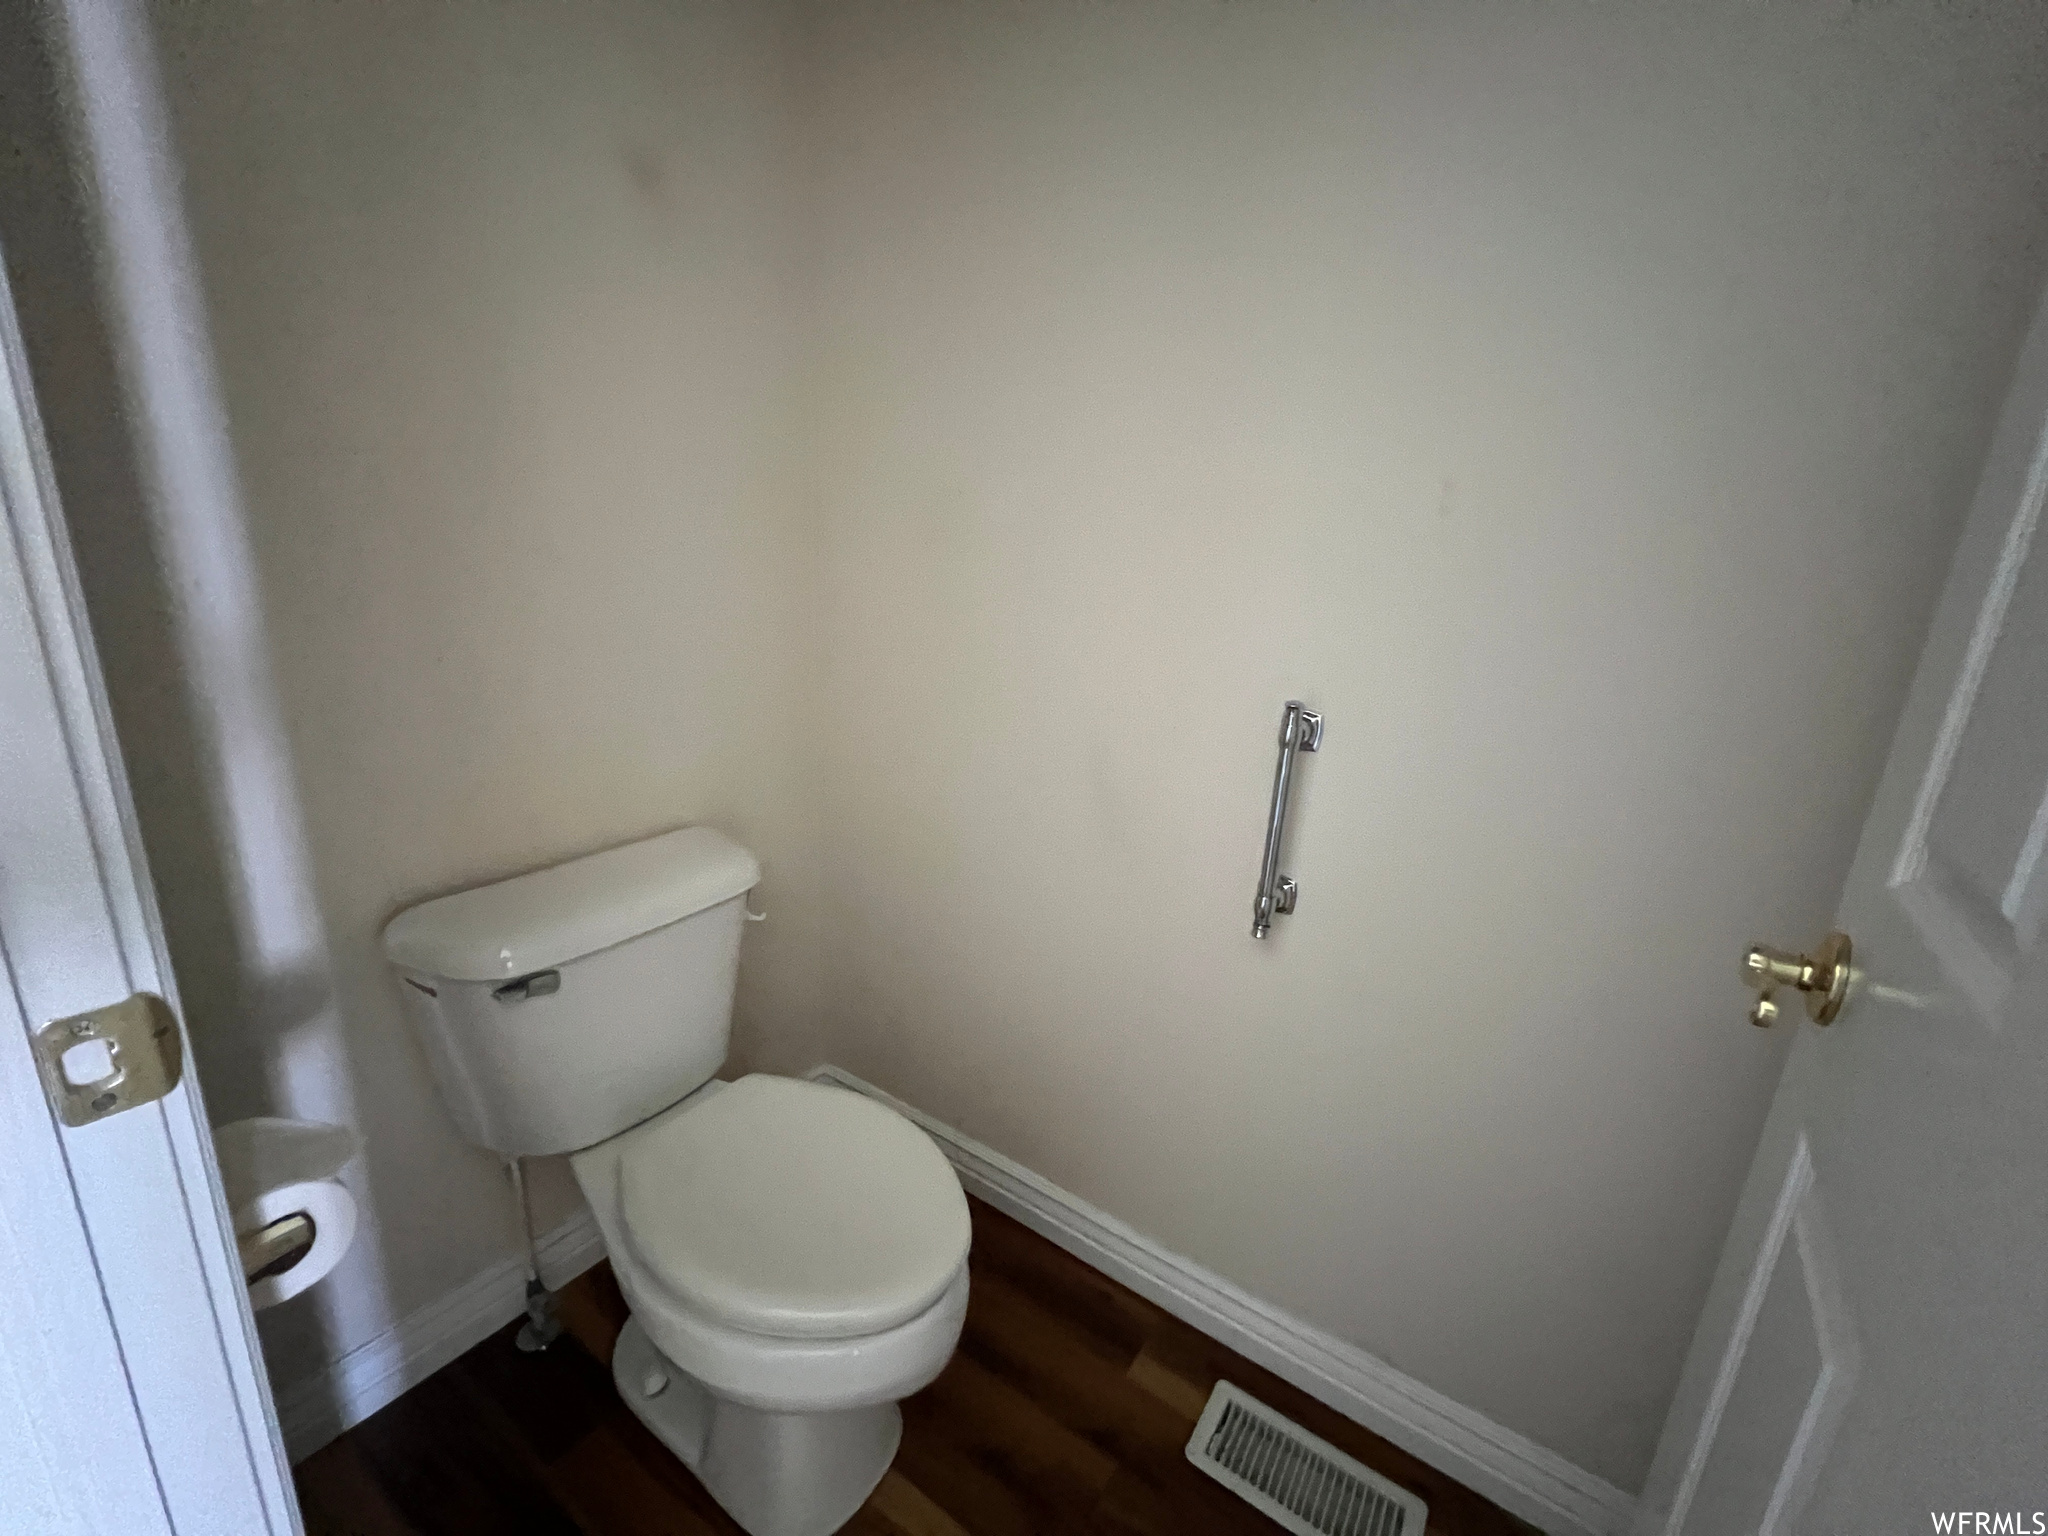 Bathroom with dark hardwood floors